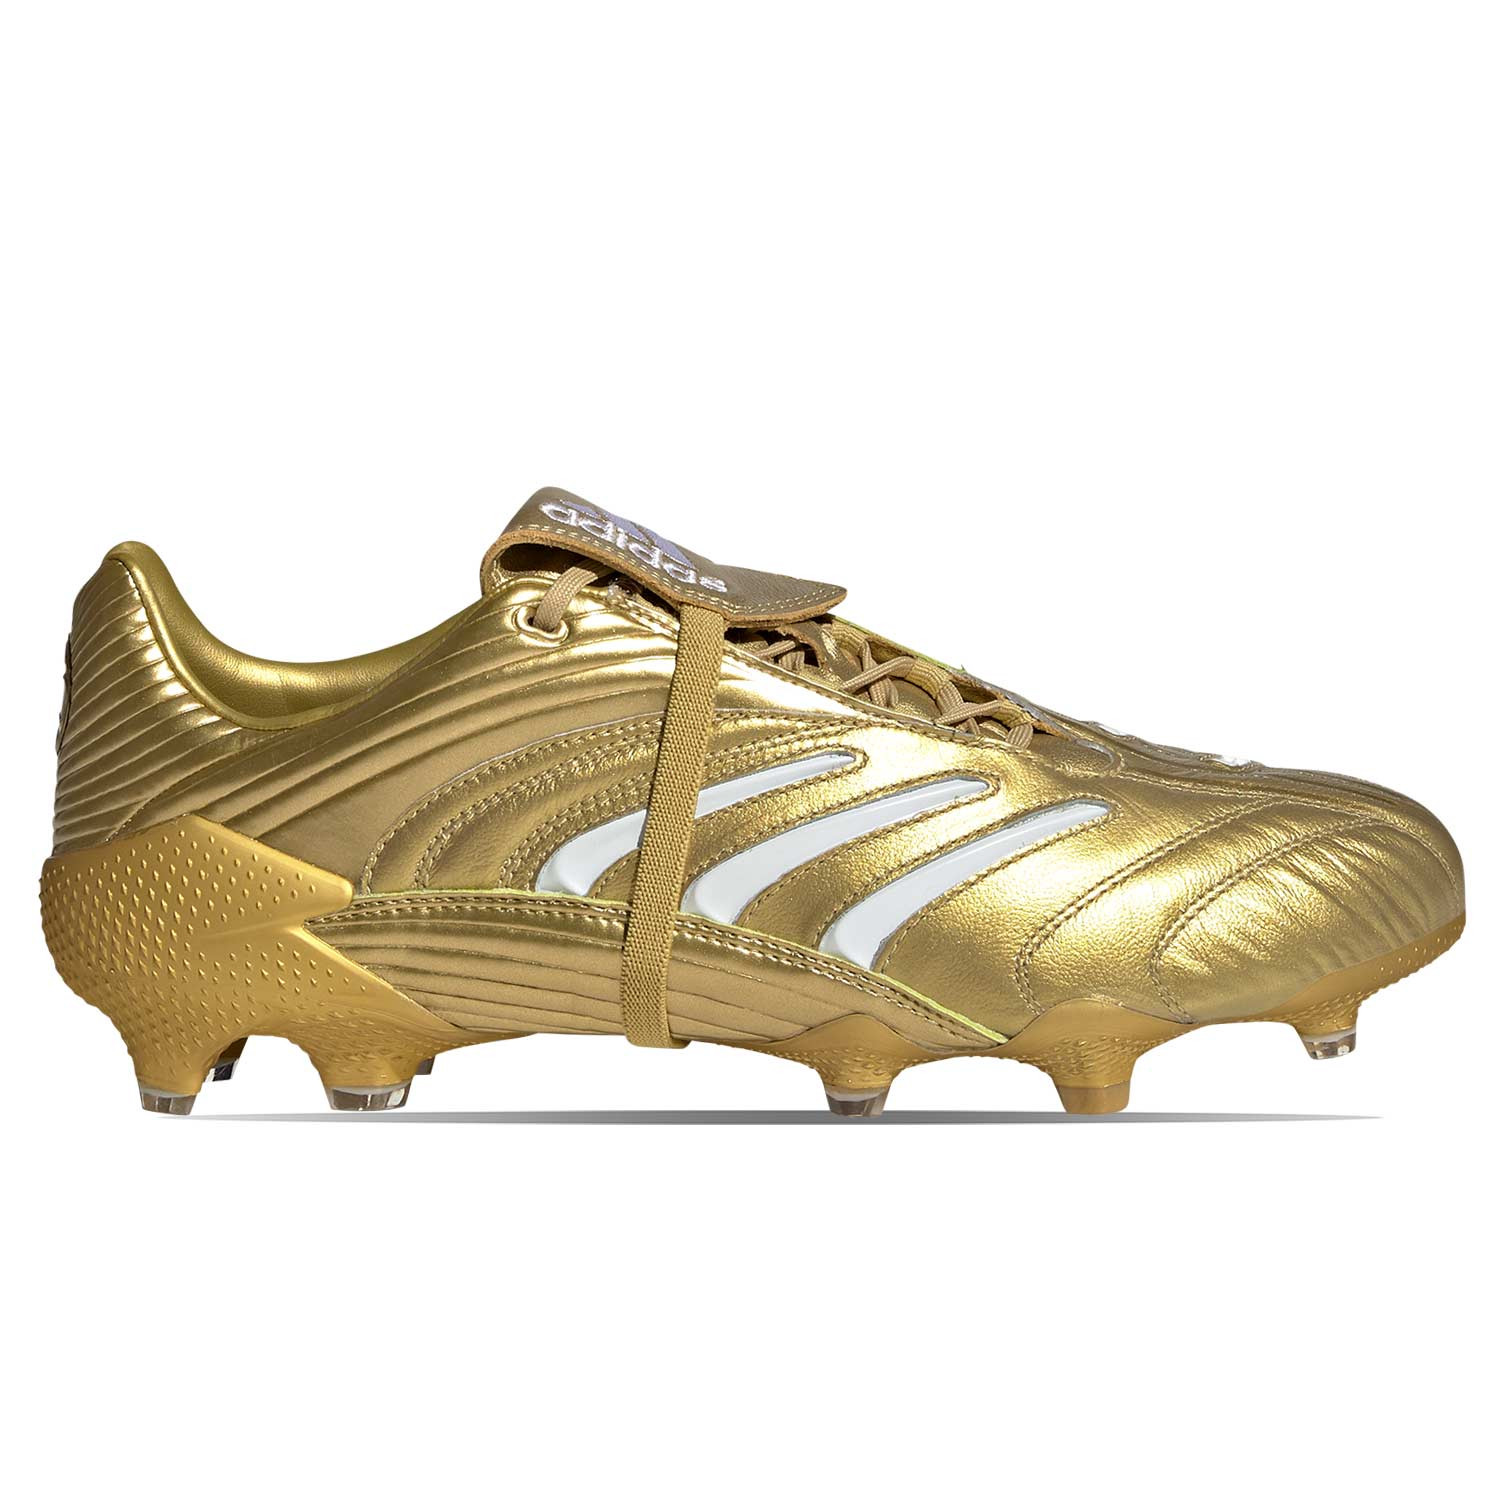 Fuerza motriz estornudar realeza Botas fútbol adidas Predator Absolute Gold FG doradas | futbolmania